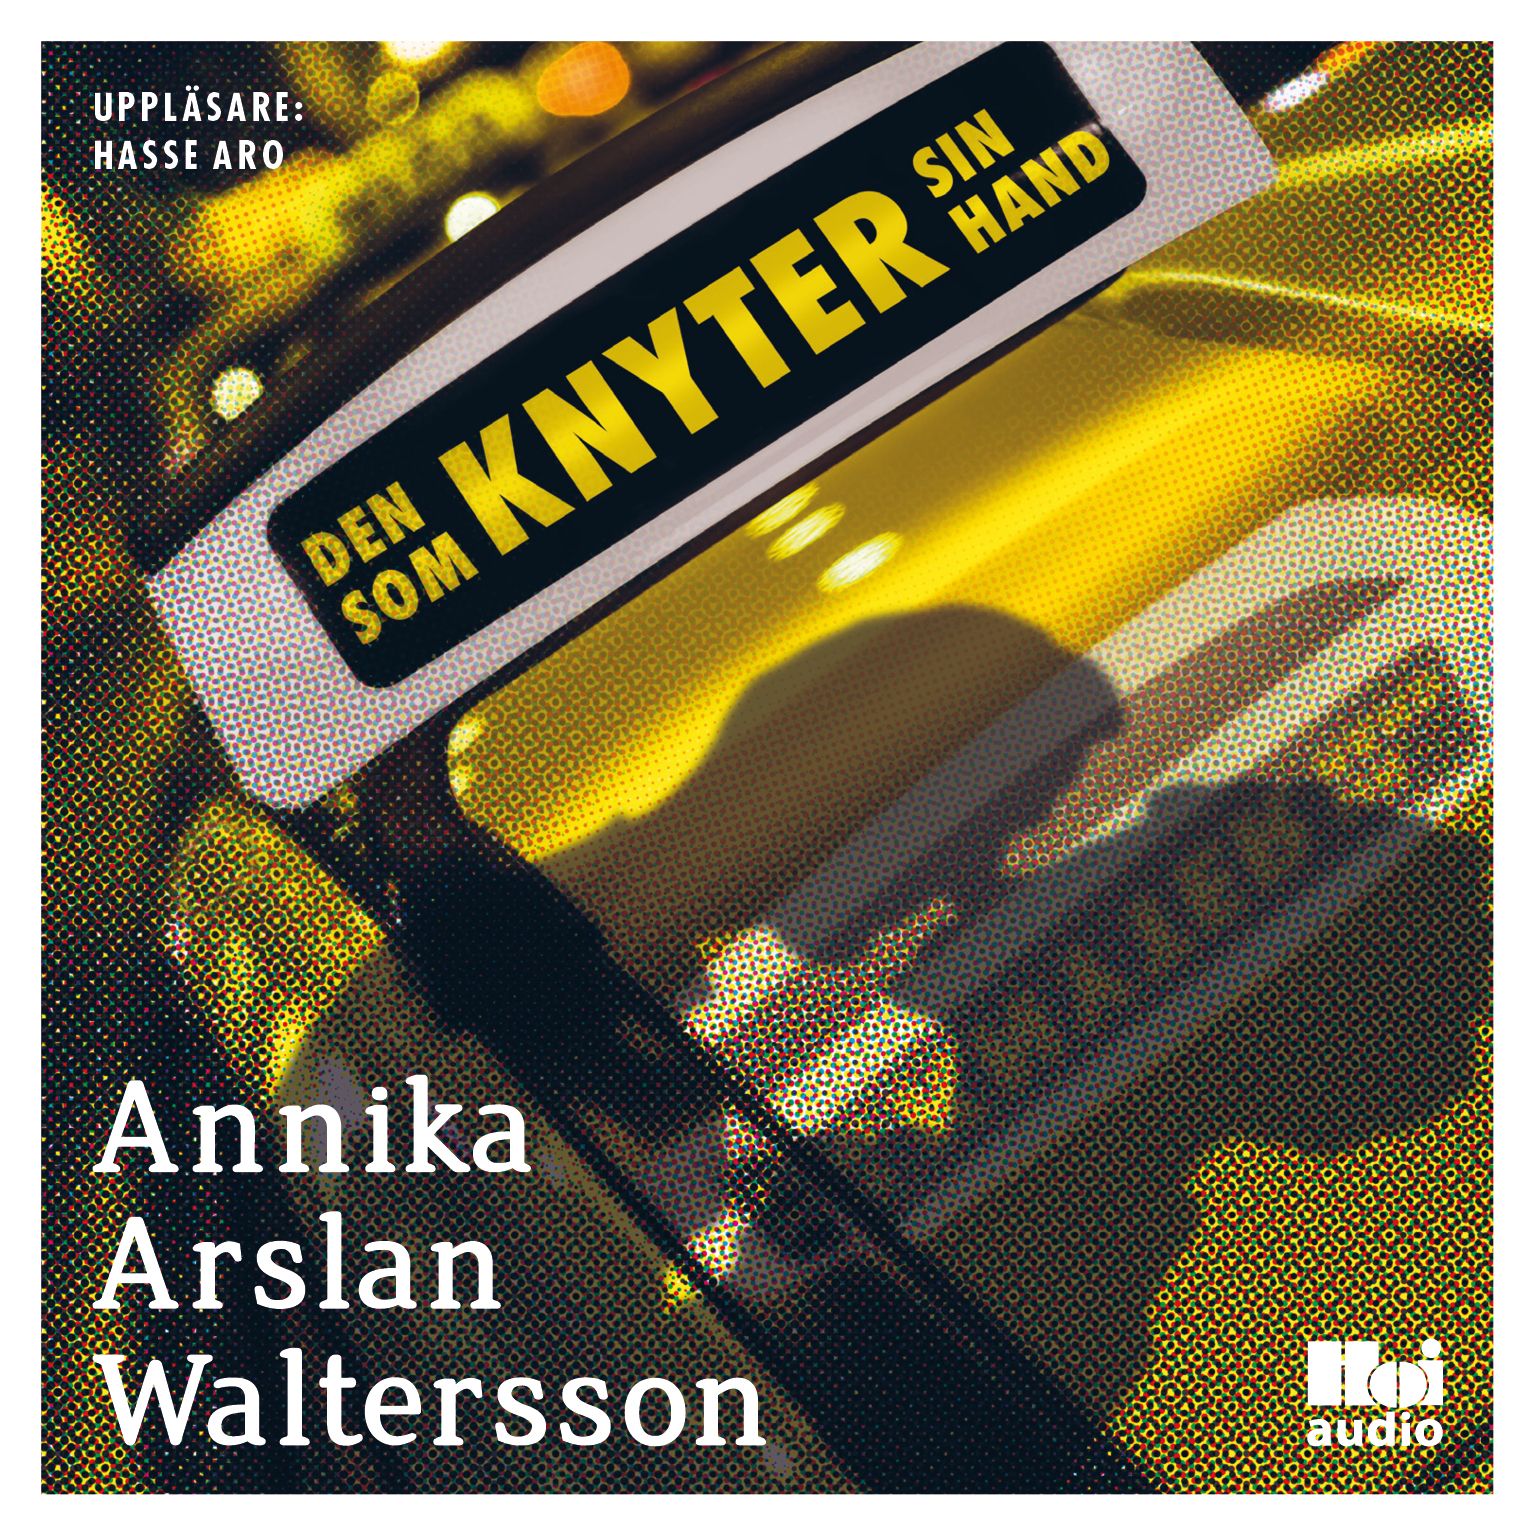 Den som knyter sin hand, audiobook by Annika Arslan Waltersson